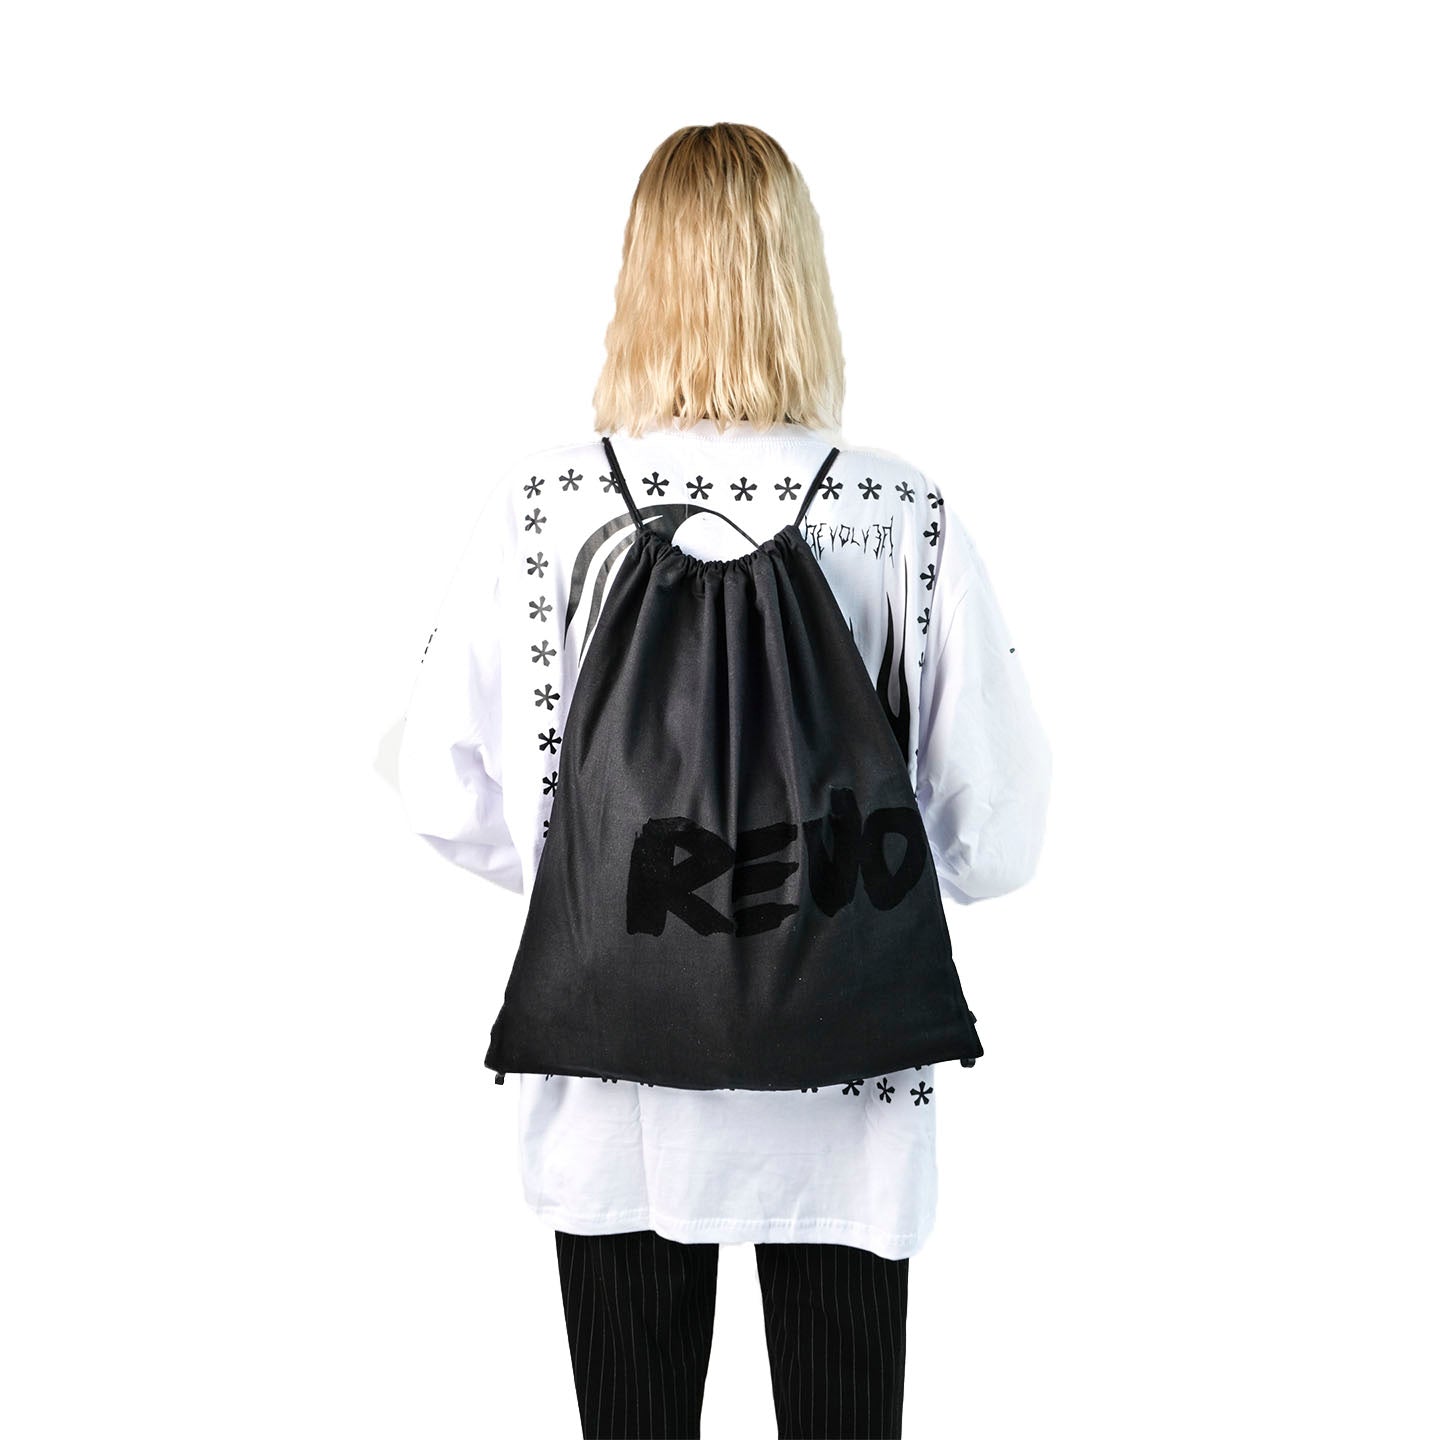 Revs Black Drawstring Bag